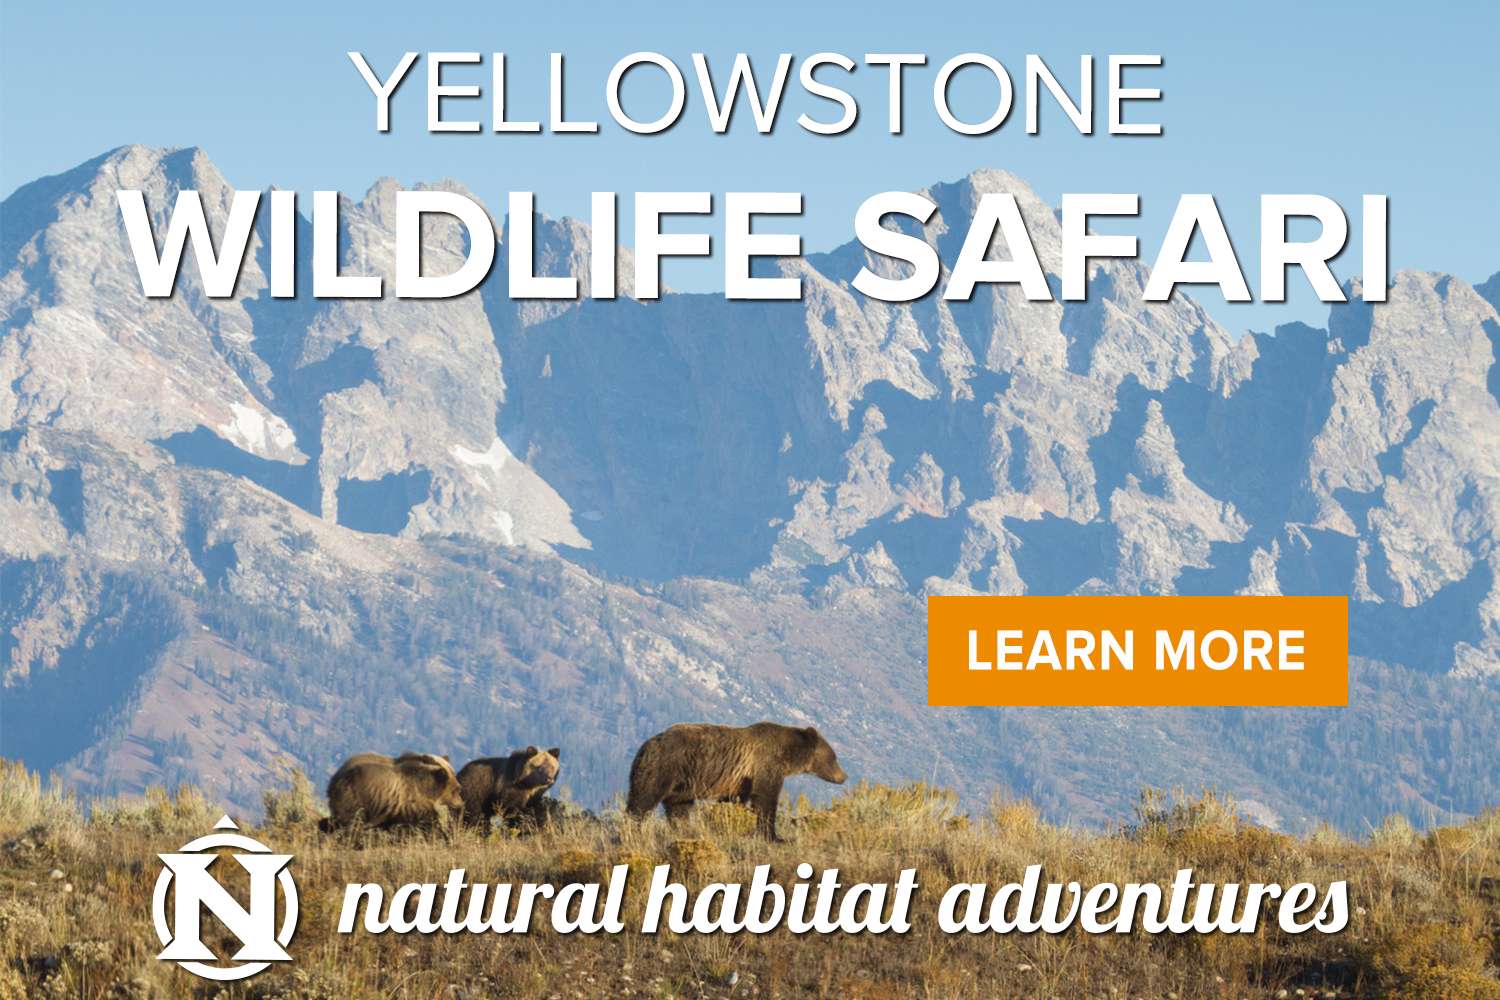 Yellowstone wildlife safari